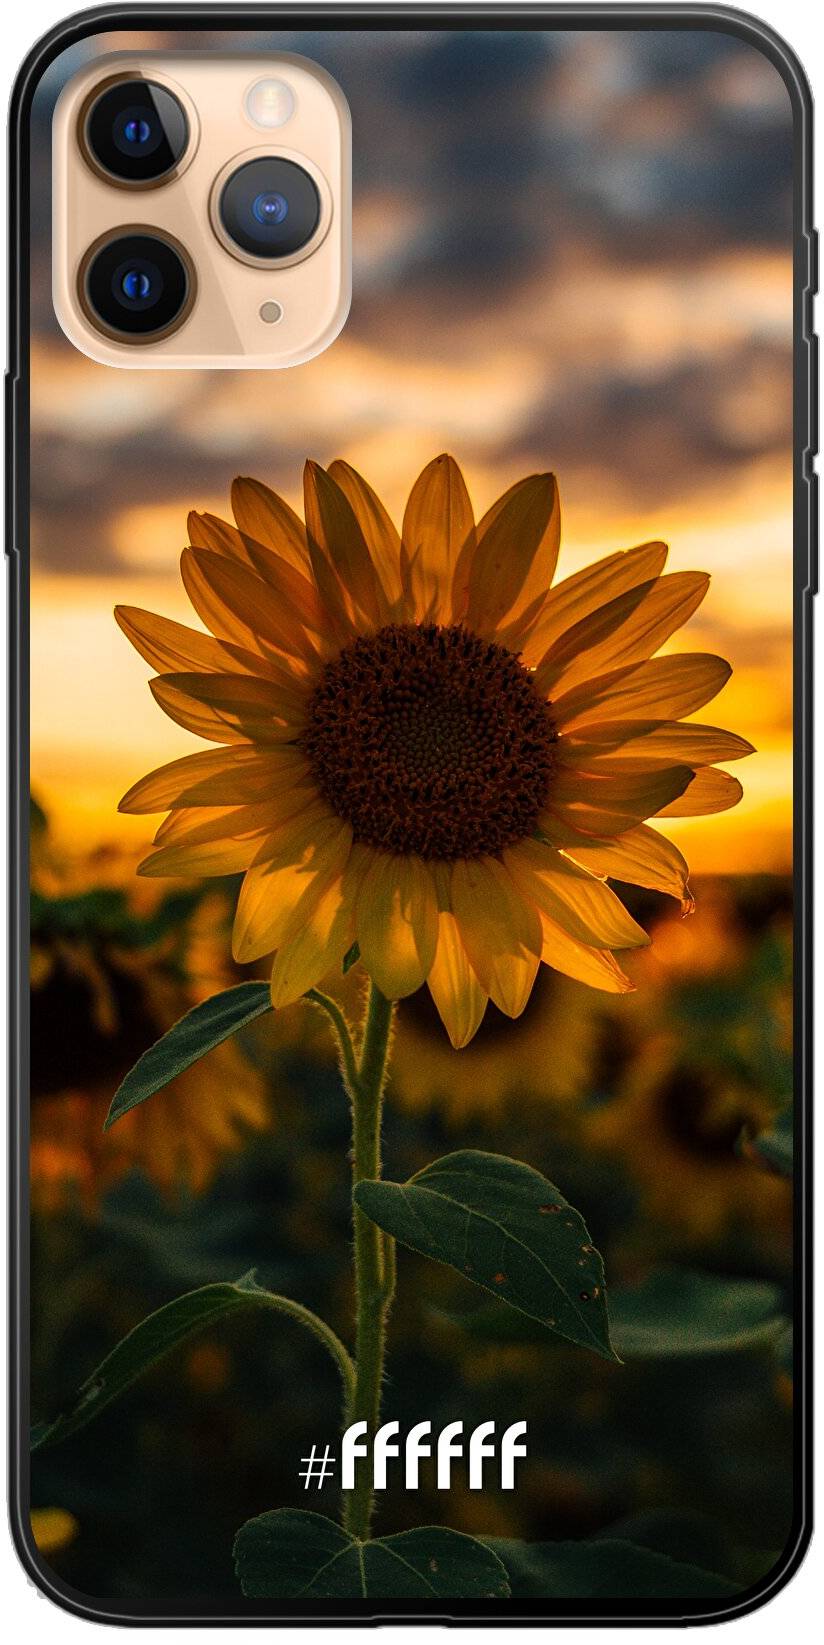 Sunset Sunflower iPhone 11 Pro Max